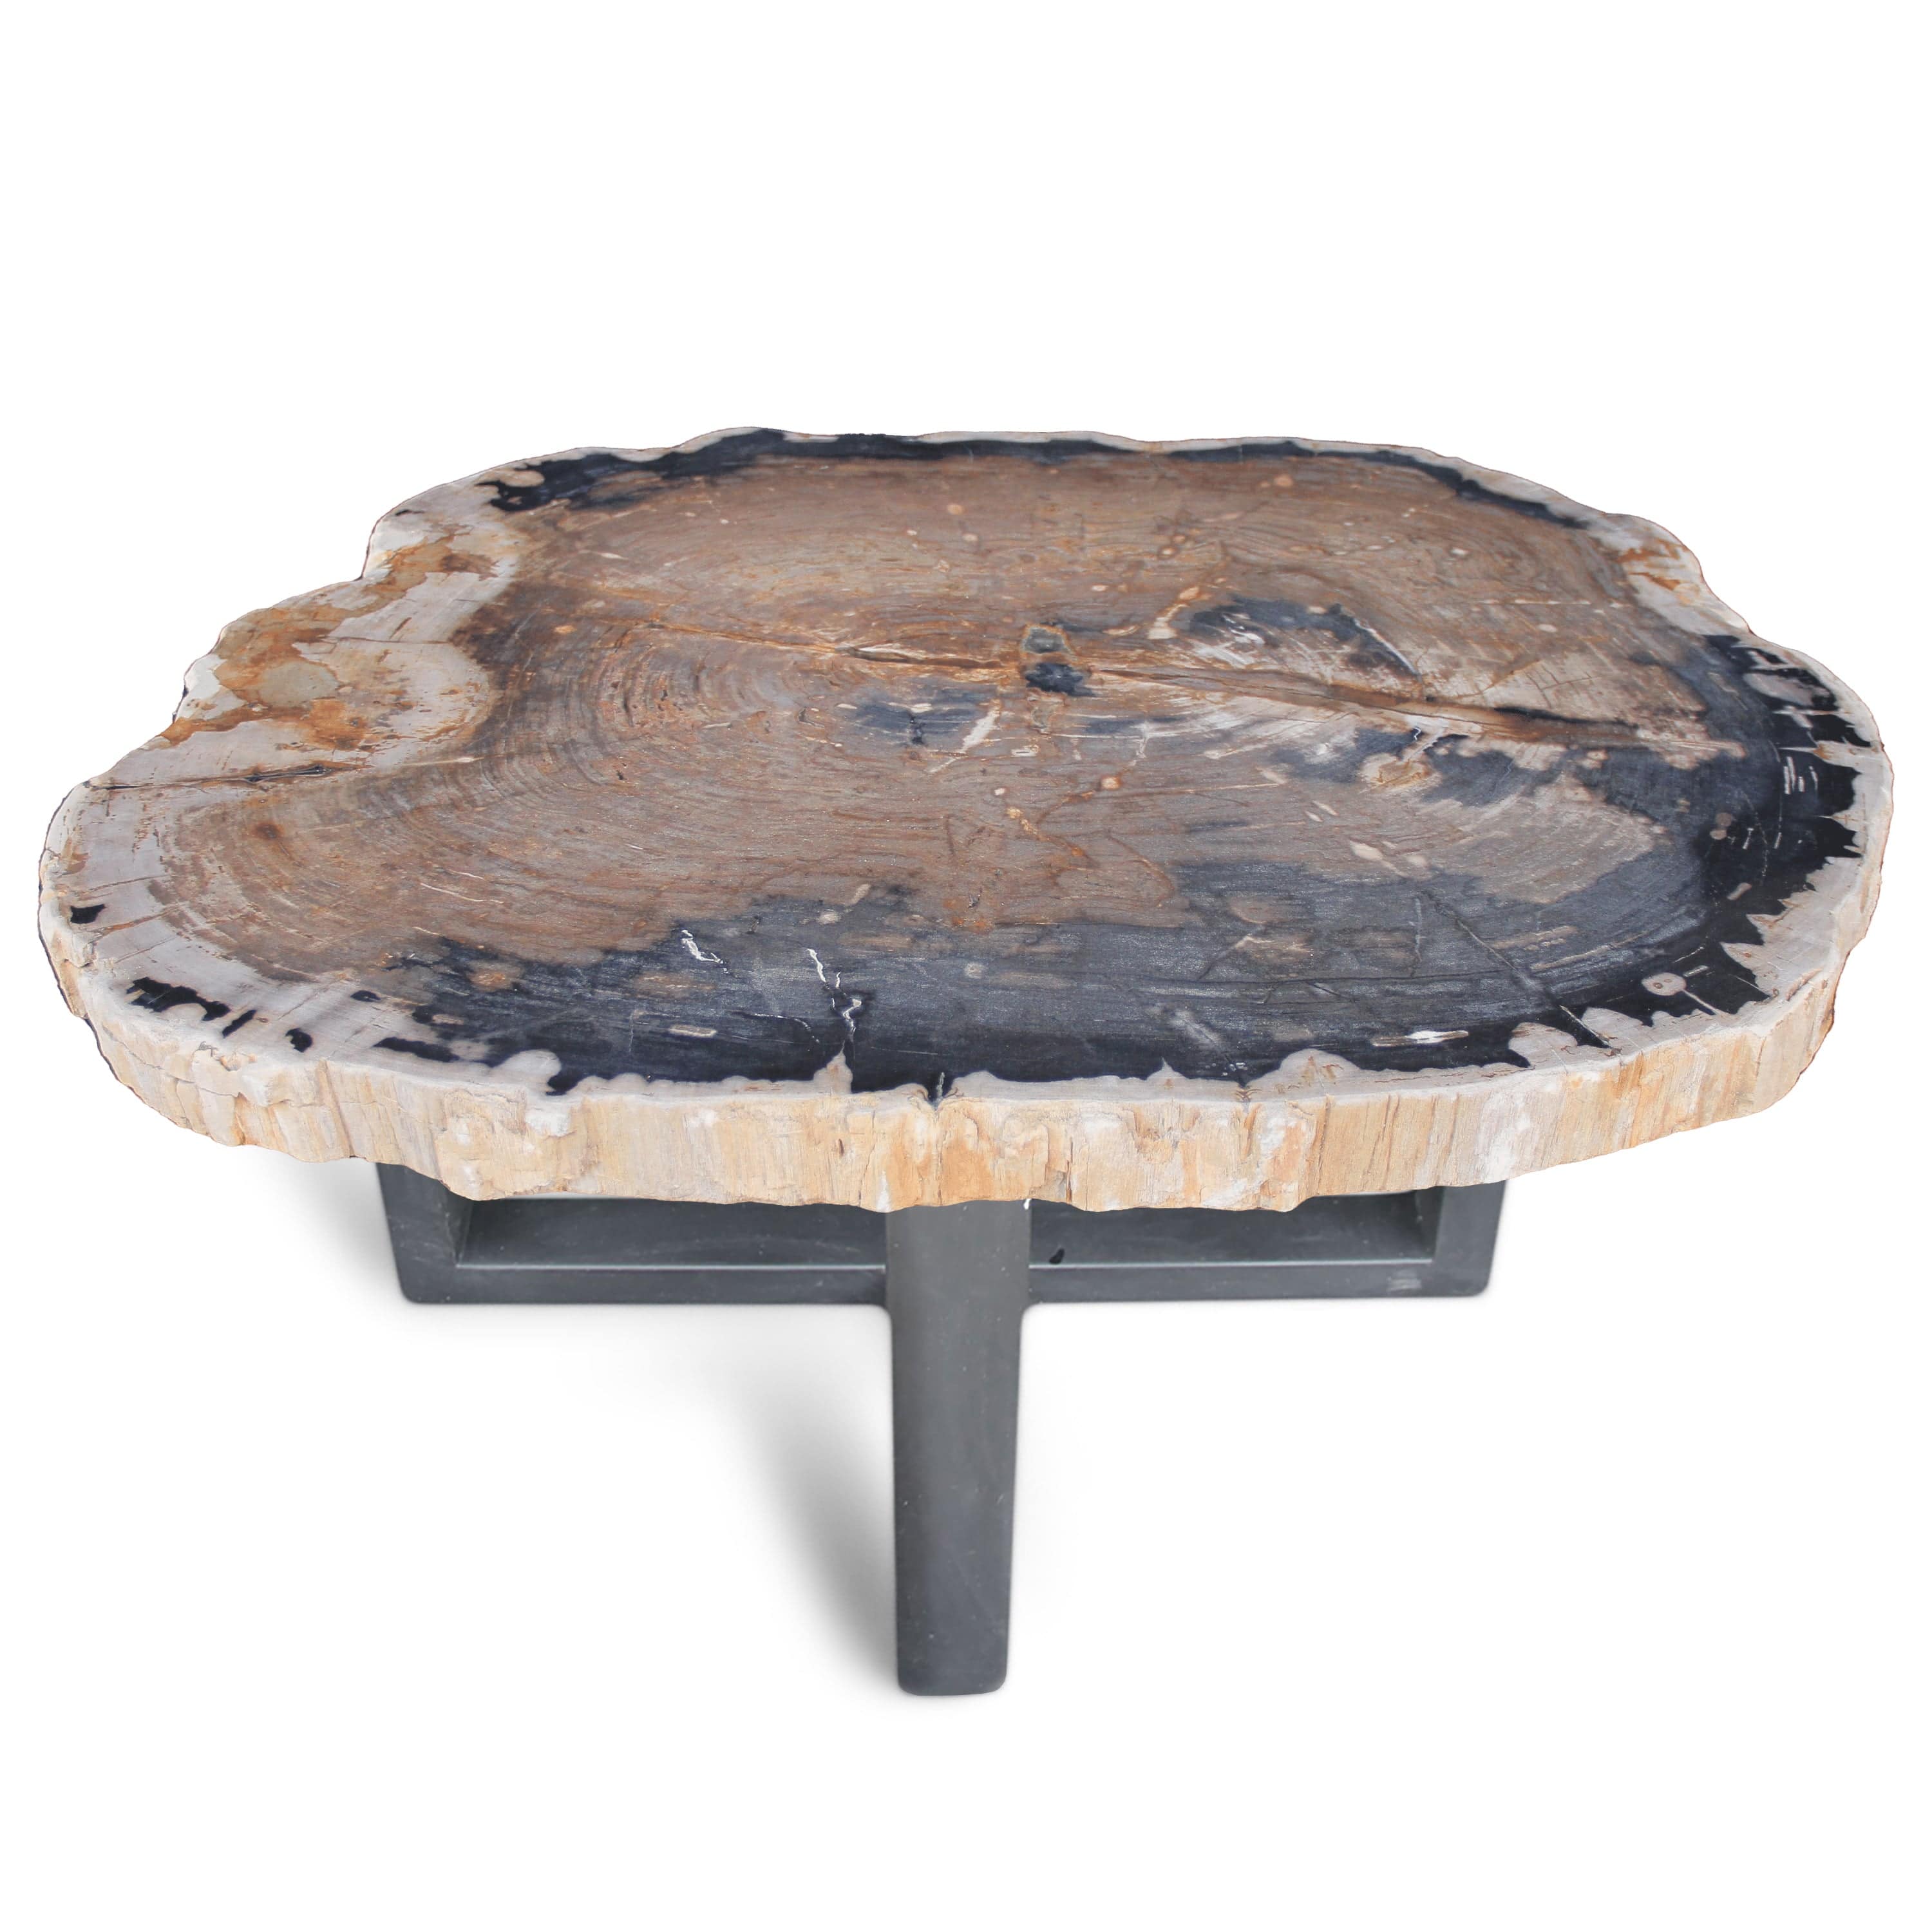 Kalifano Petrified Wood Polished Petrified Wood Coffee Table from Indonesia - 40" / 223 lbs PWT8080.002